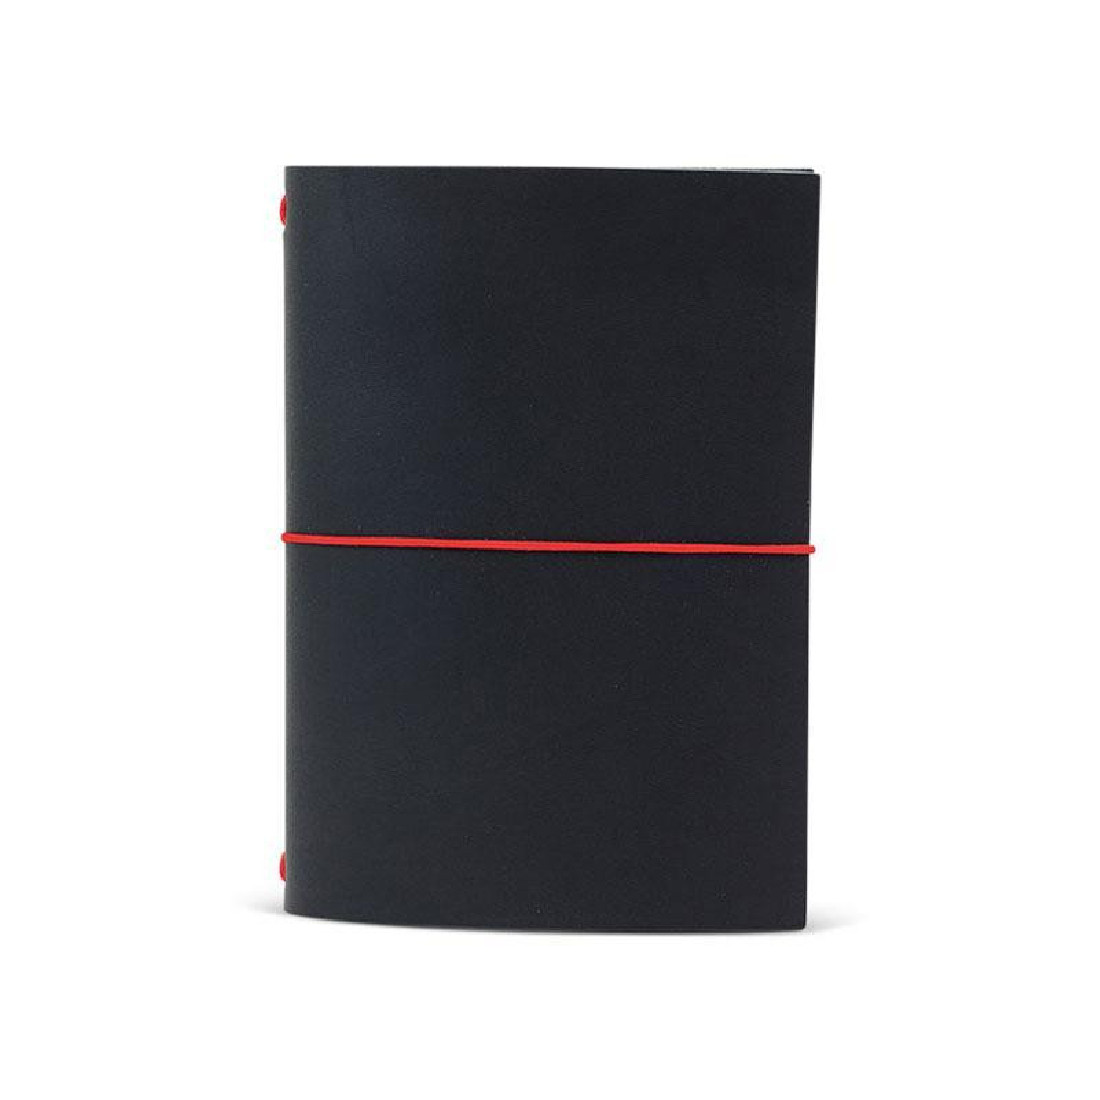 Paper Republic grand voyageur pocket black leather journal